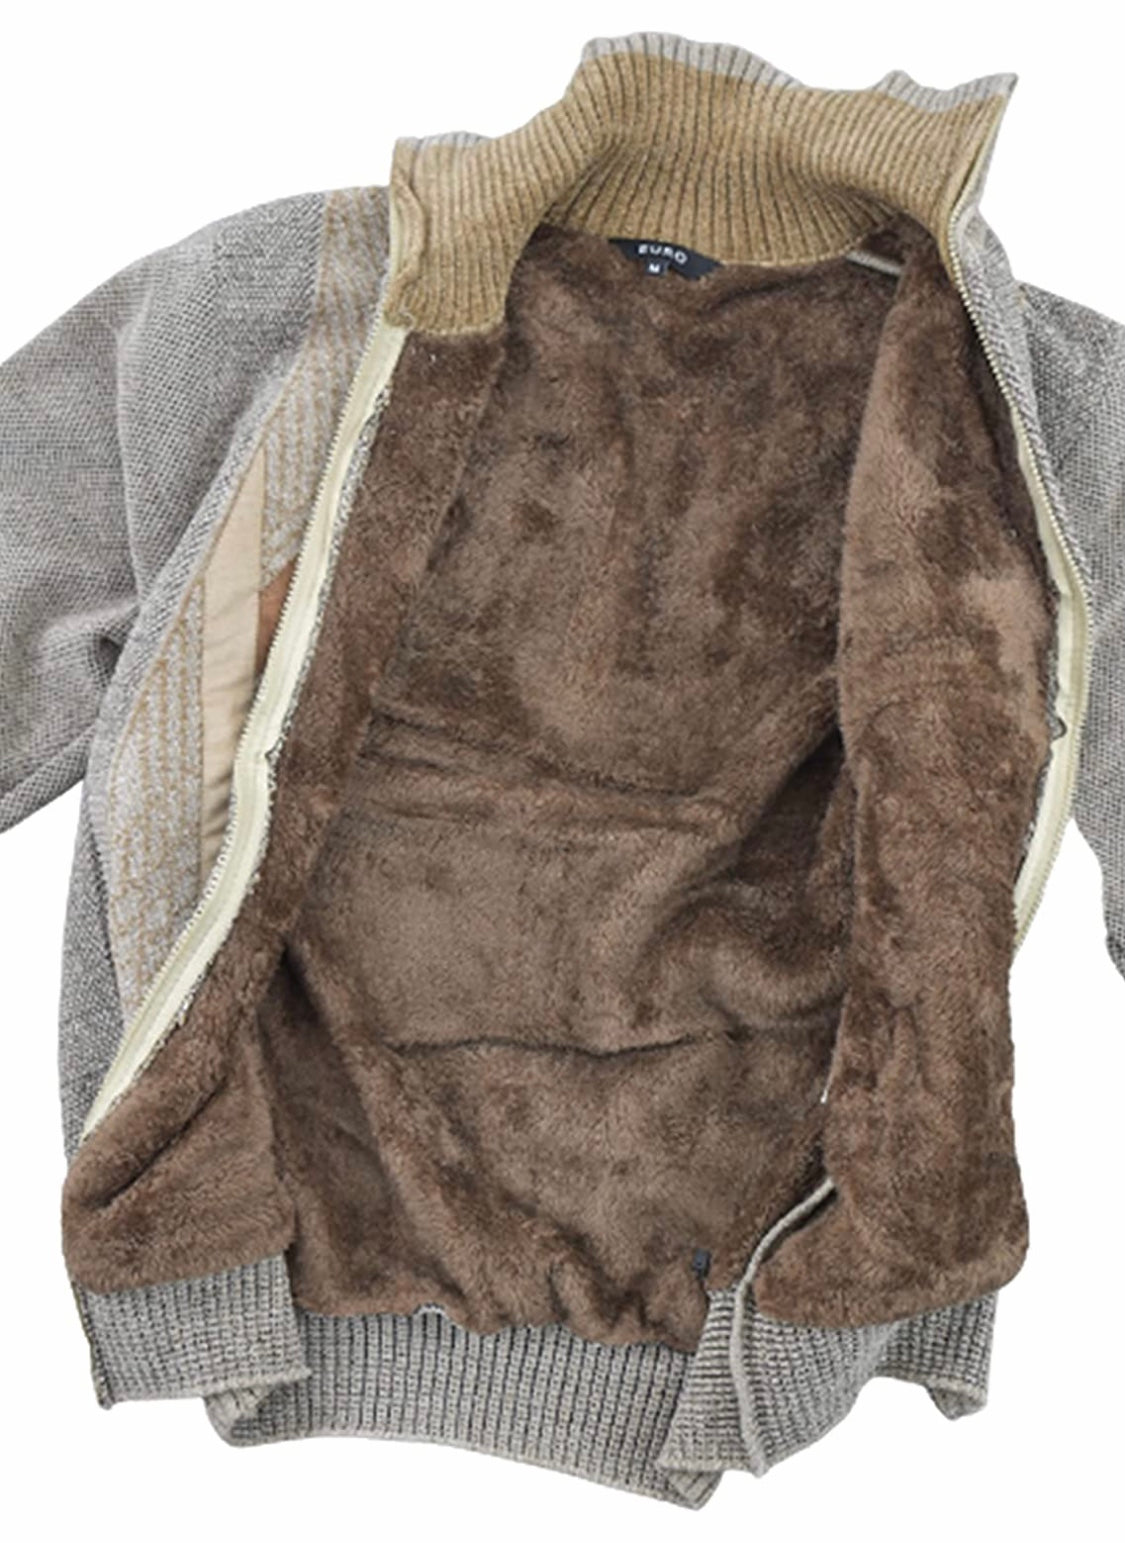 JJ Willis Mens Montreal Fur Lined Zipper Cardigan Jacket